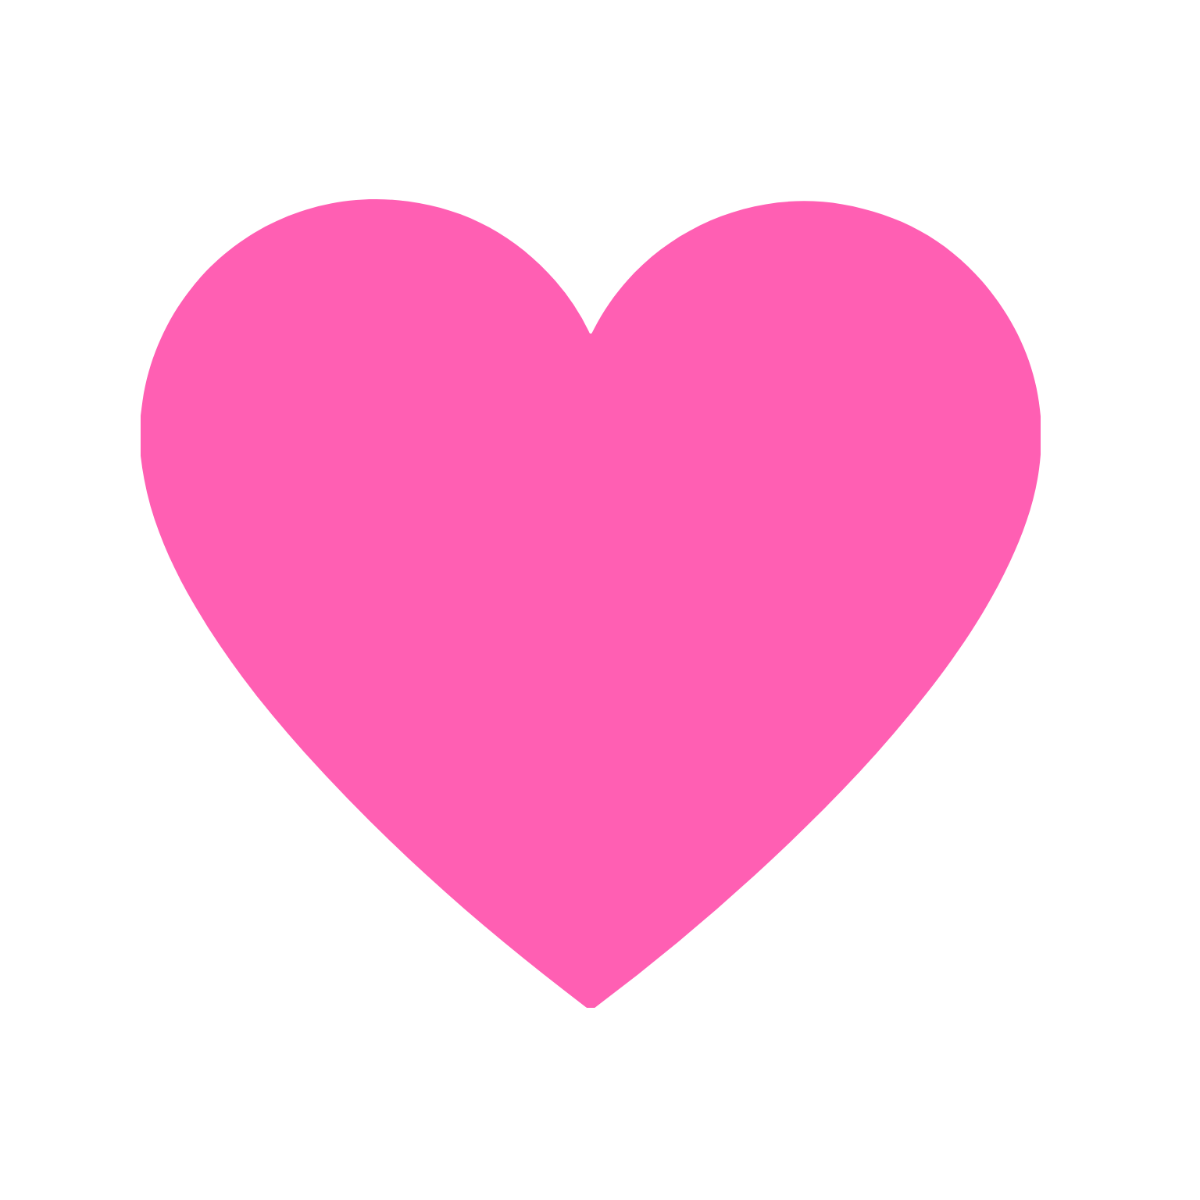 https://images.template.net/94481/free-pink-heart-outline-clipart-edit-online.jpg